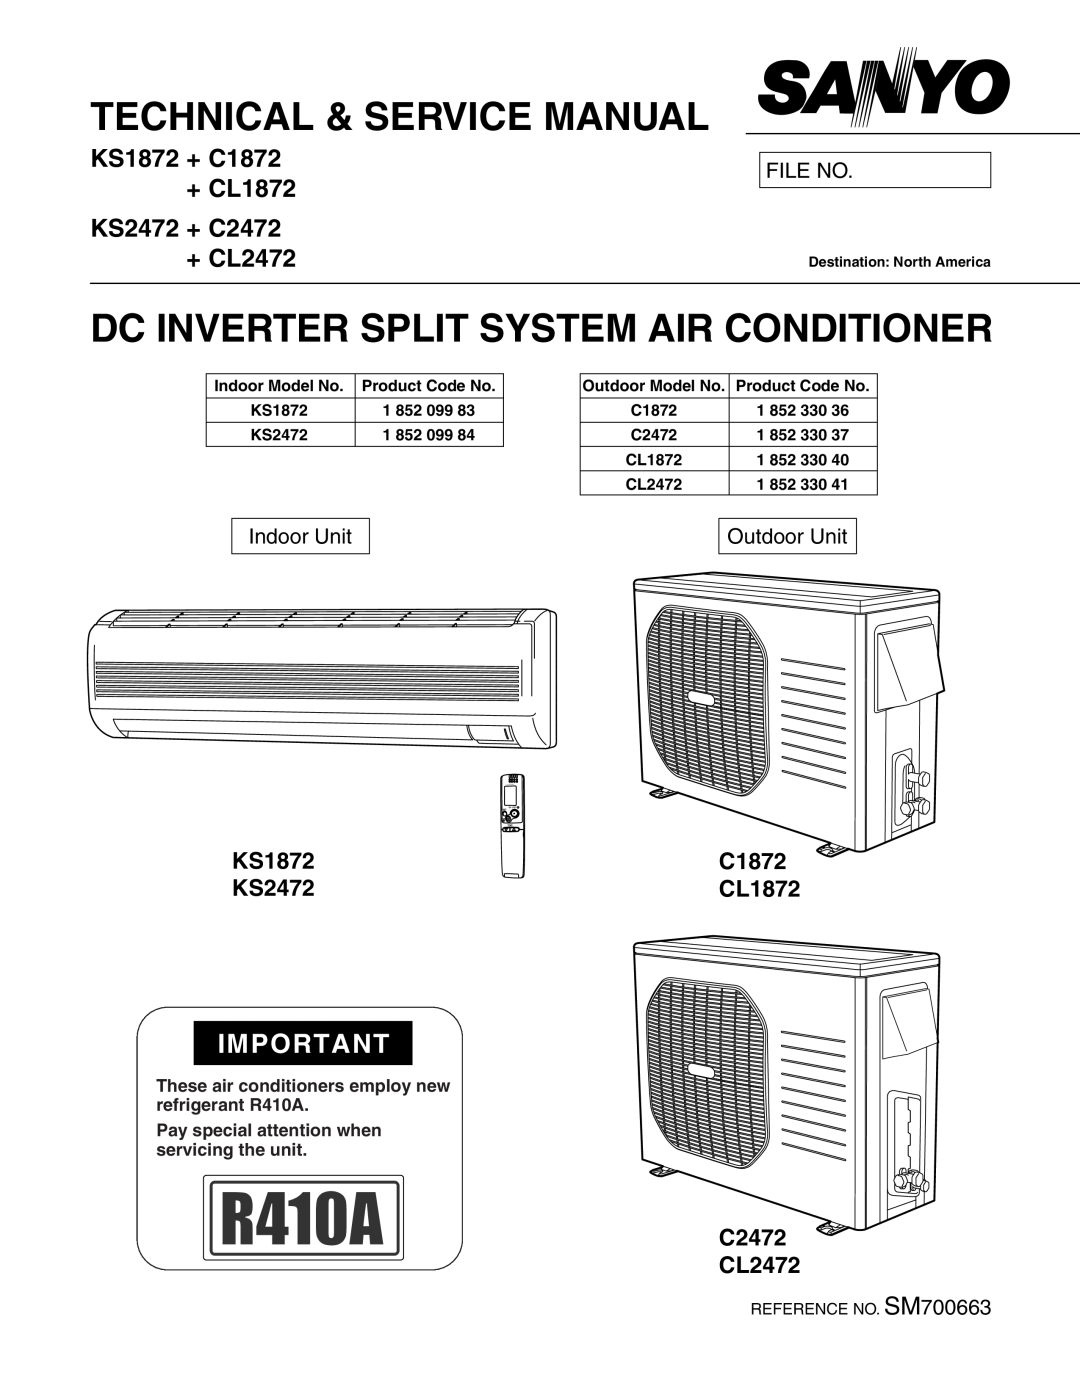 Sanyo service manual KS1872 + C1872 + CL1872 KS2472 + C2472 + CL2472, Dc Inverter Split System Air Conditioner, File No 